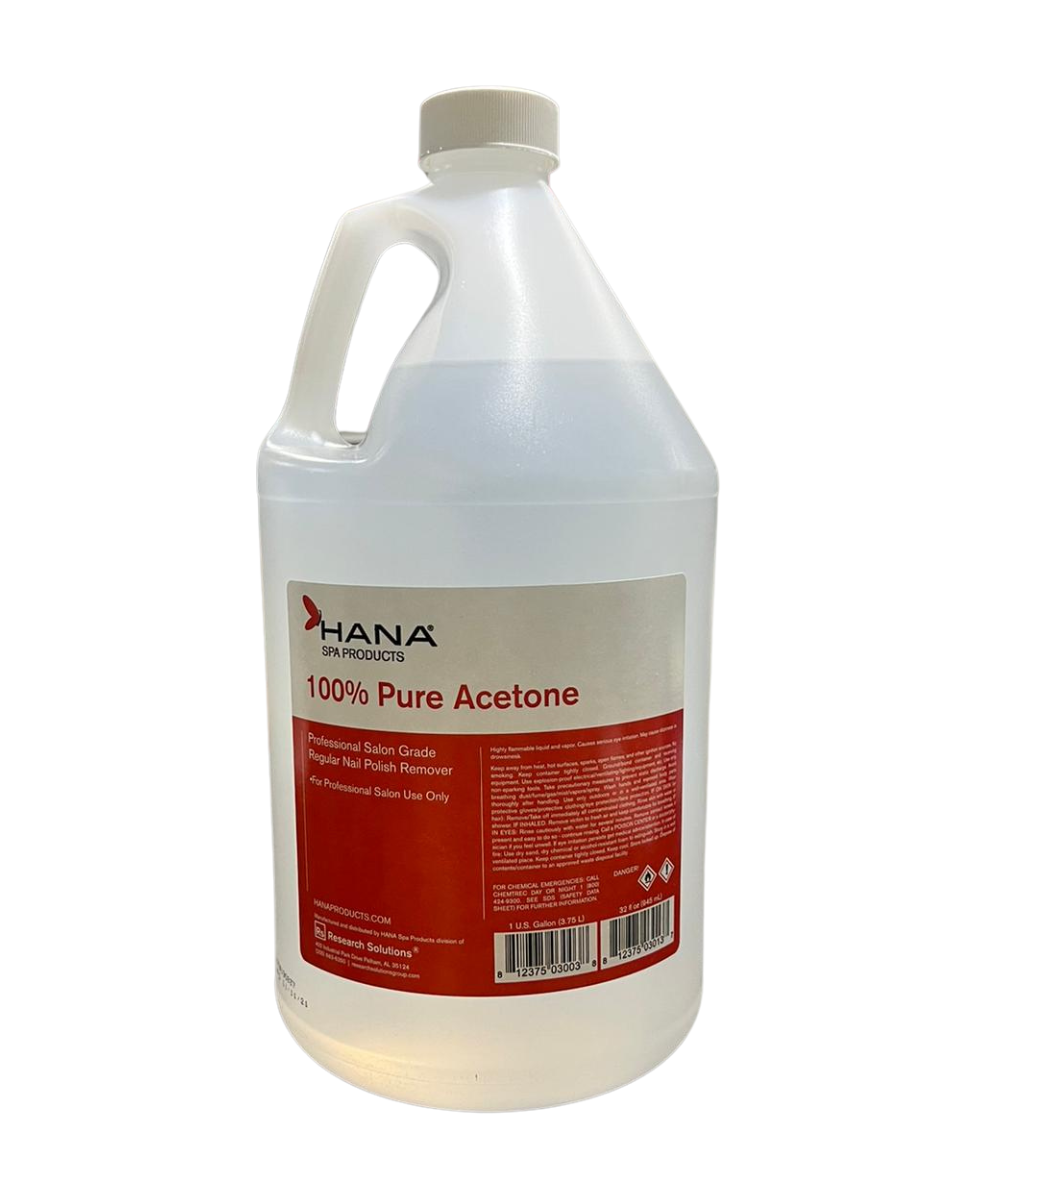 HANA SPA PRODUCTS HANA Regular Nail Polish Remover - 100% Pure Acetone Gallon